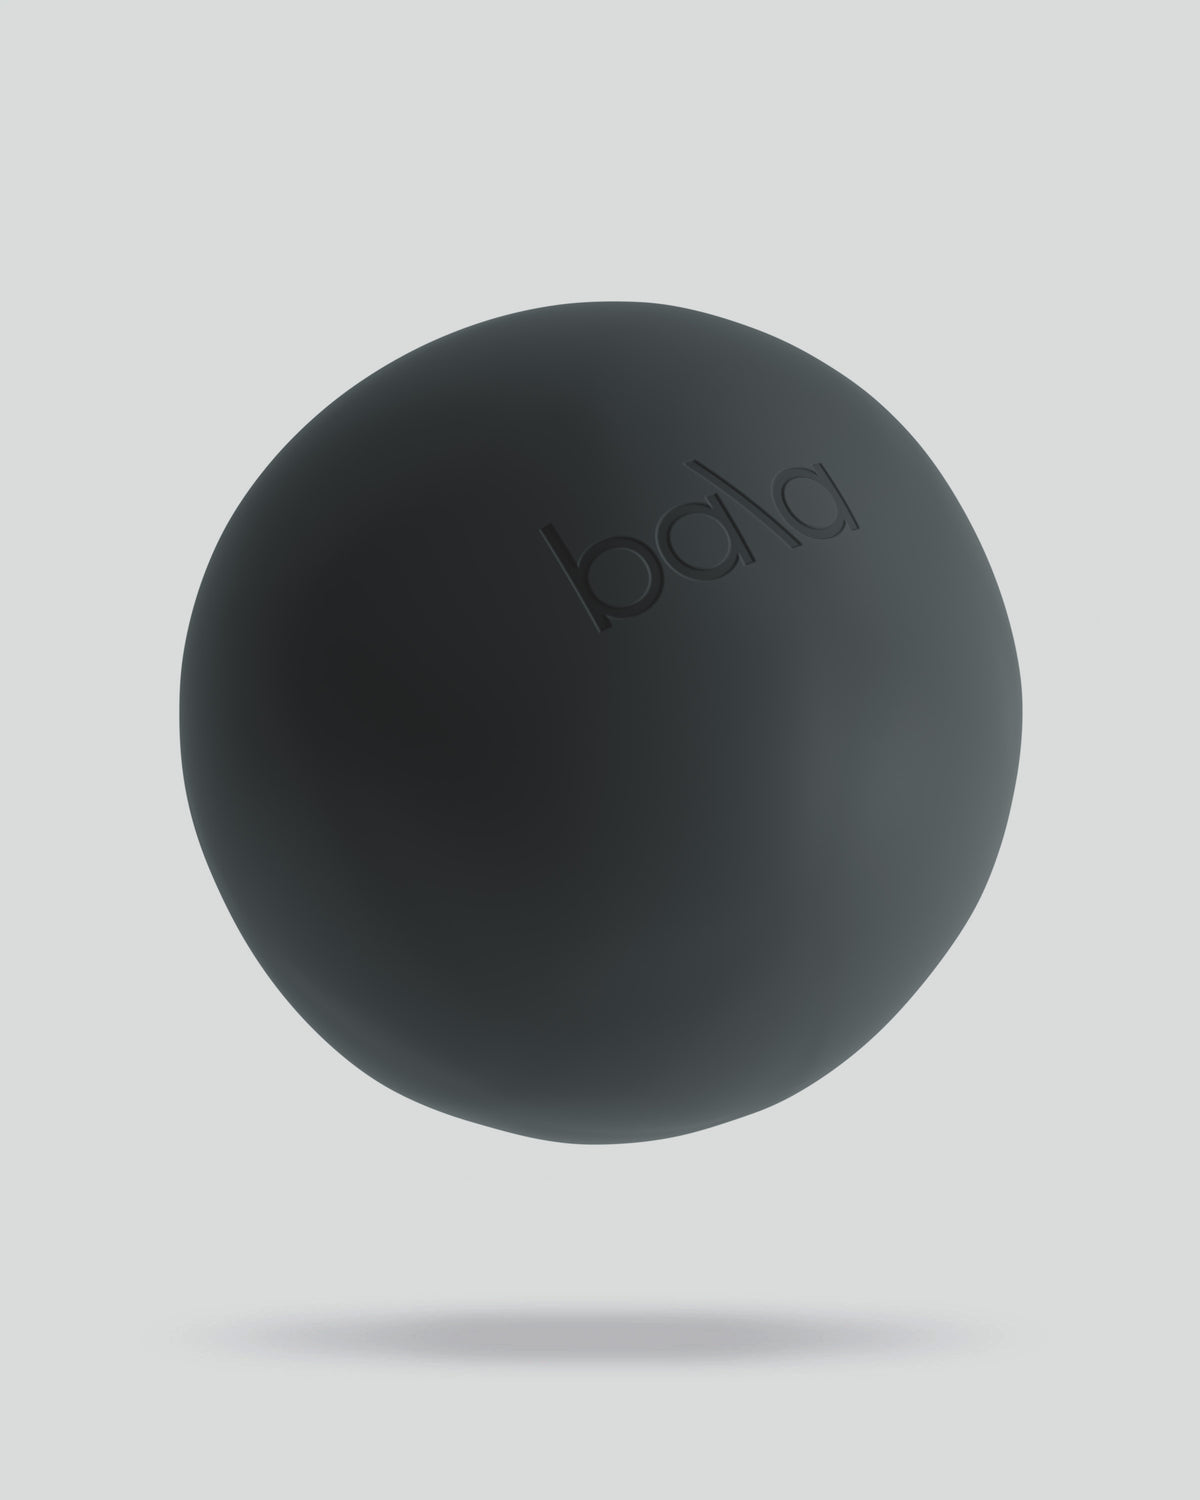 Bala Ball(Colors: Sage, Sea, Blush)( 8"diameter)